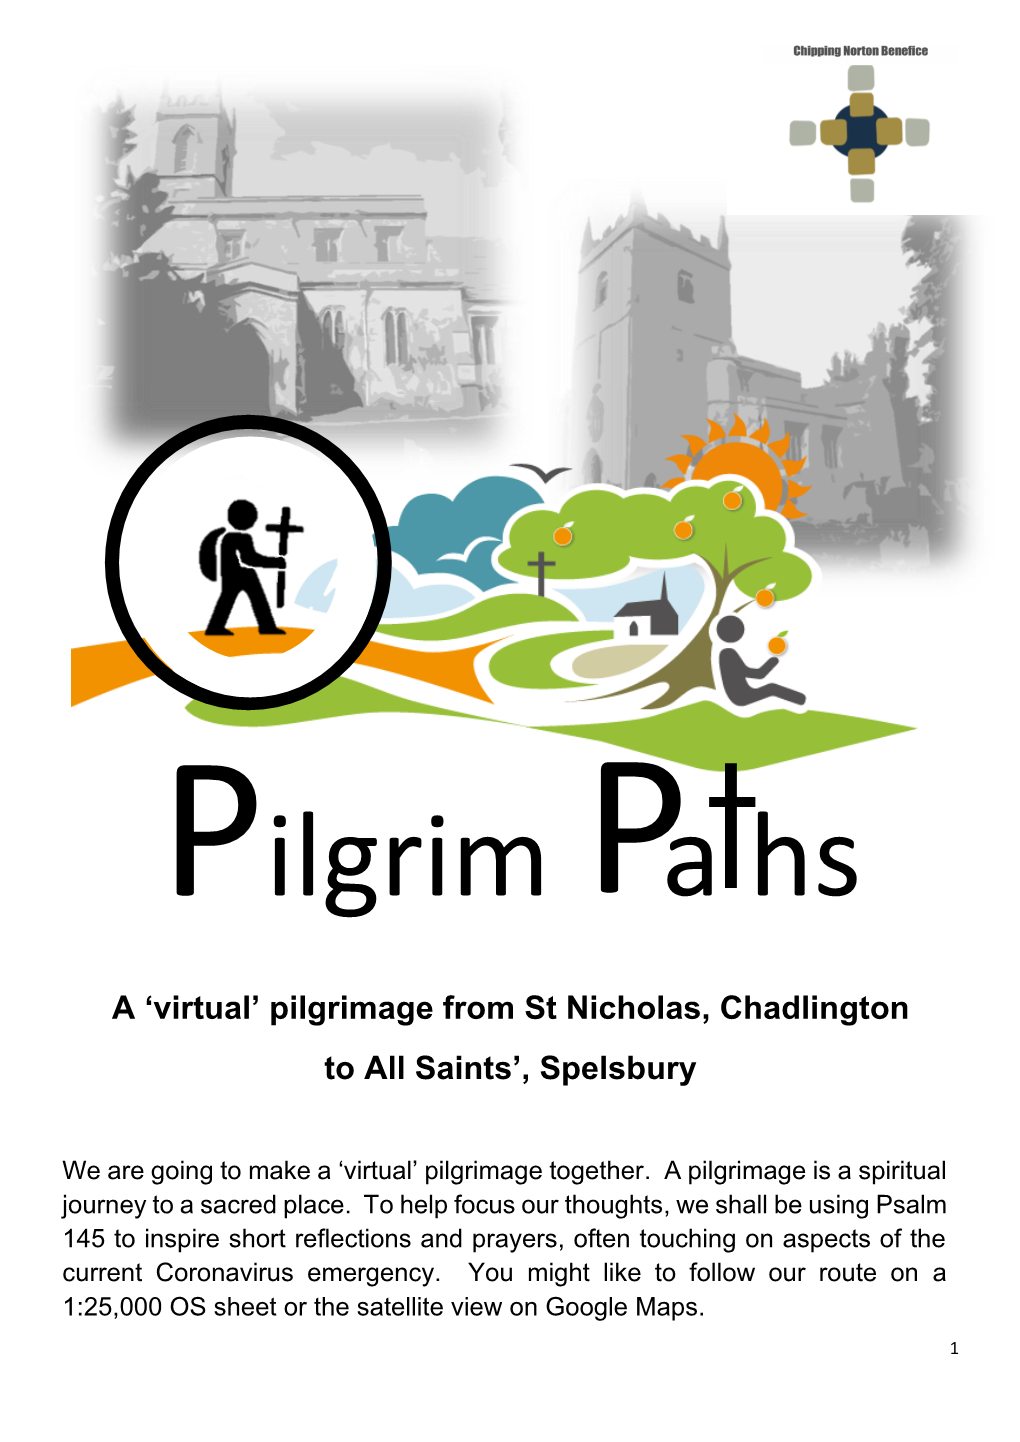 Virtual Pilgrimage – Chadlington to Spelsbury